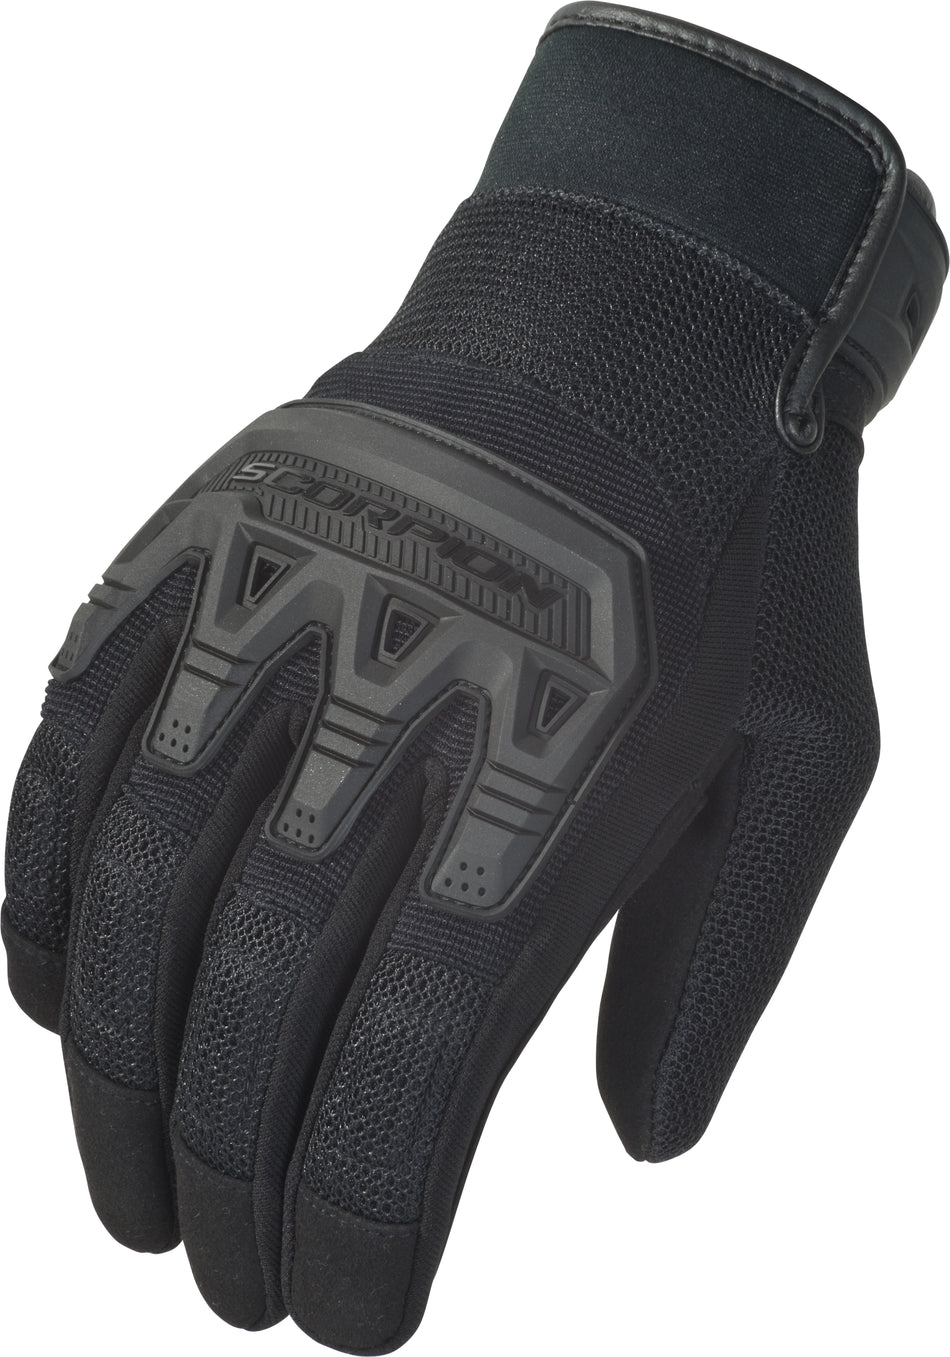 SCORPION EXO Covert Tactical Gloves Black Lg G32-035